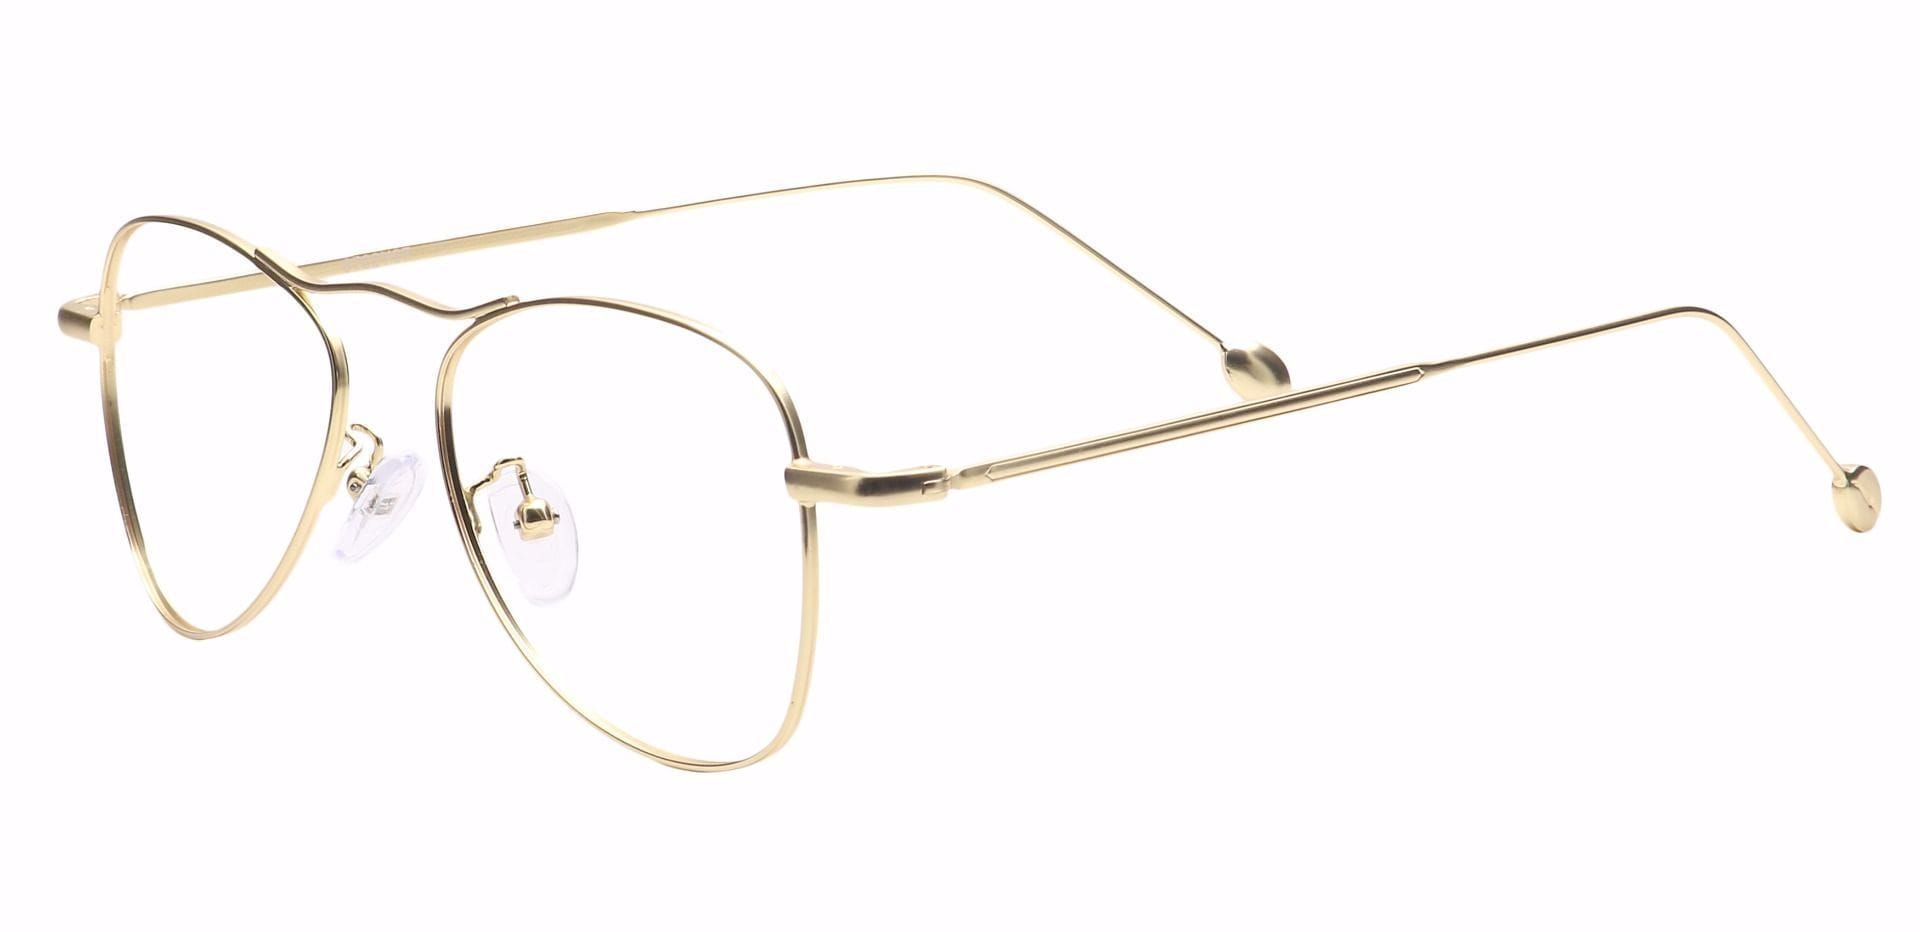 Brio Aviator Reading Glasses - Gold